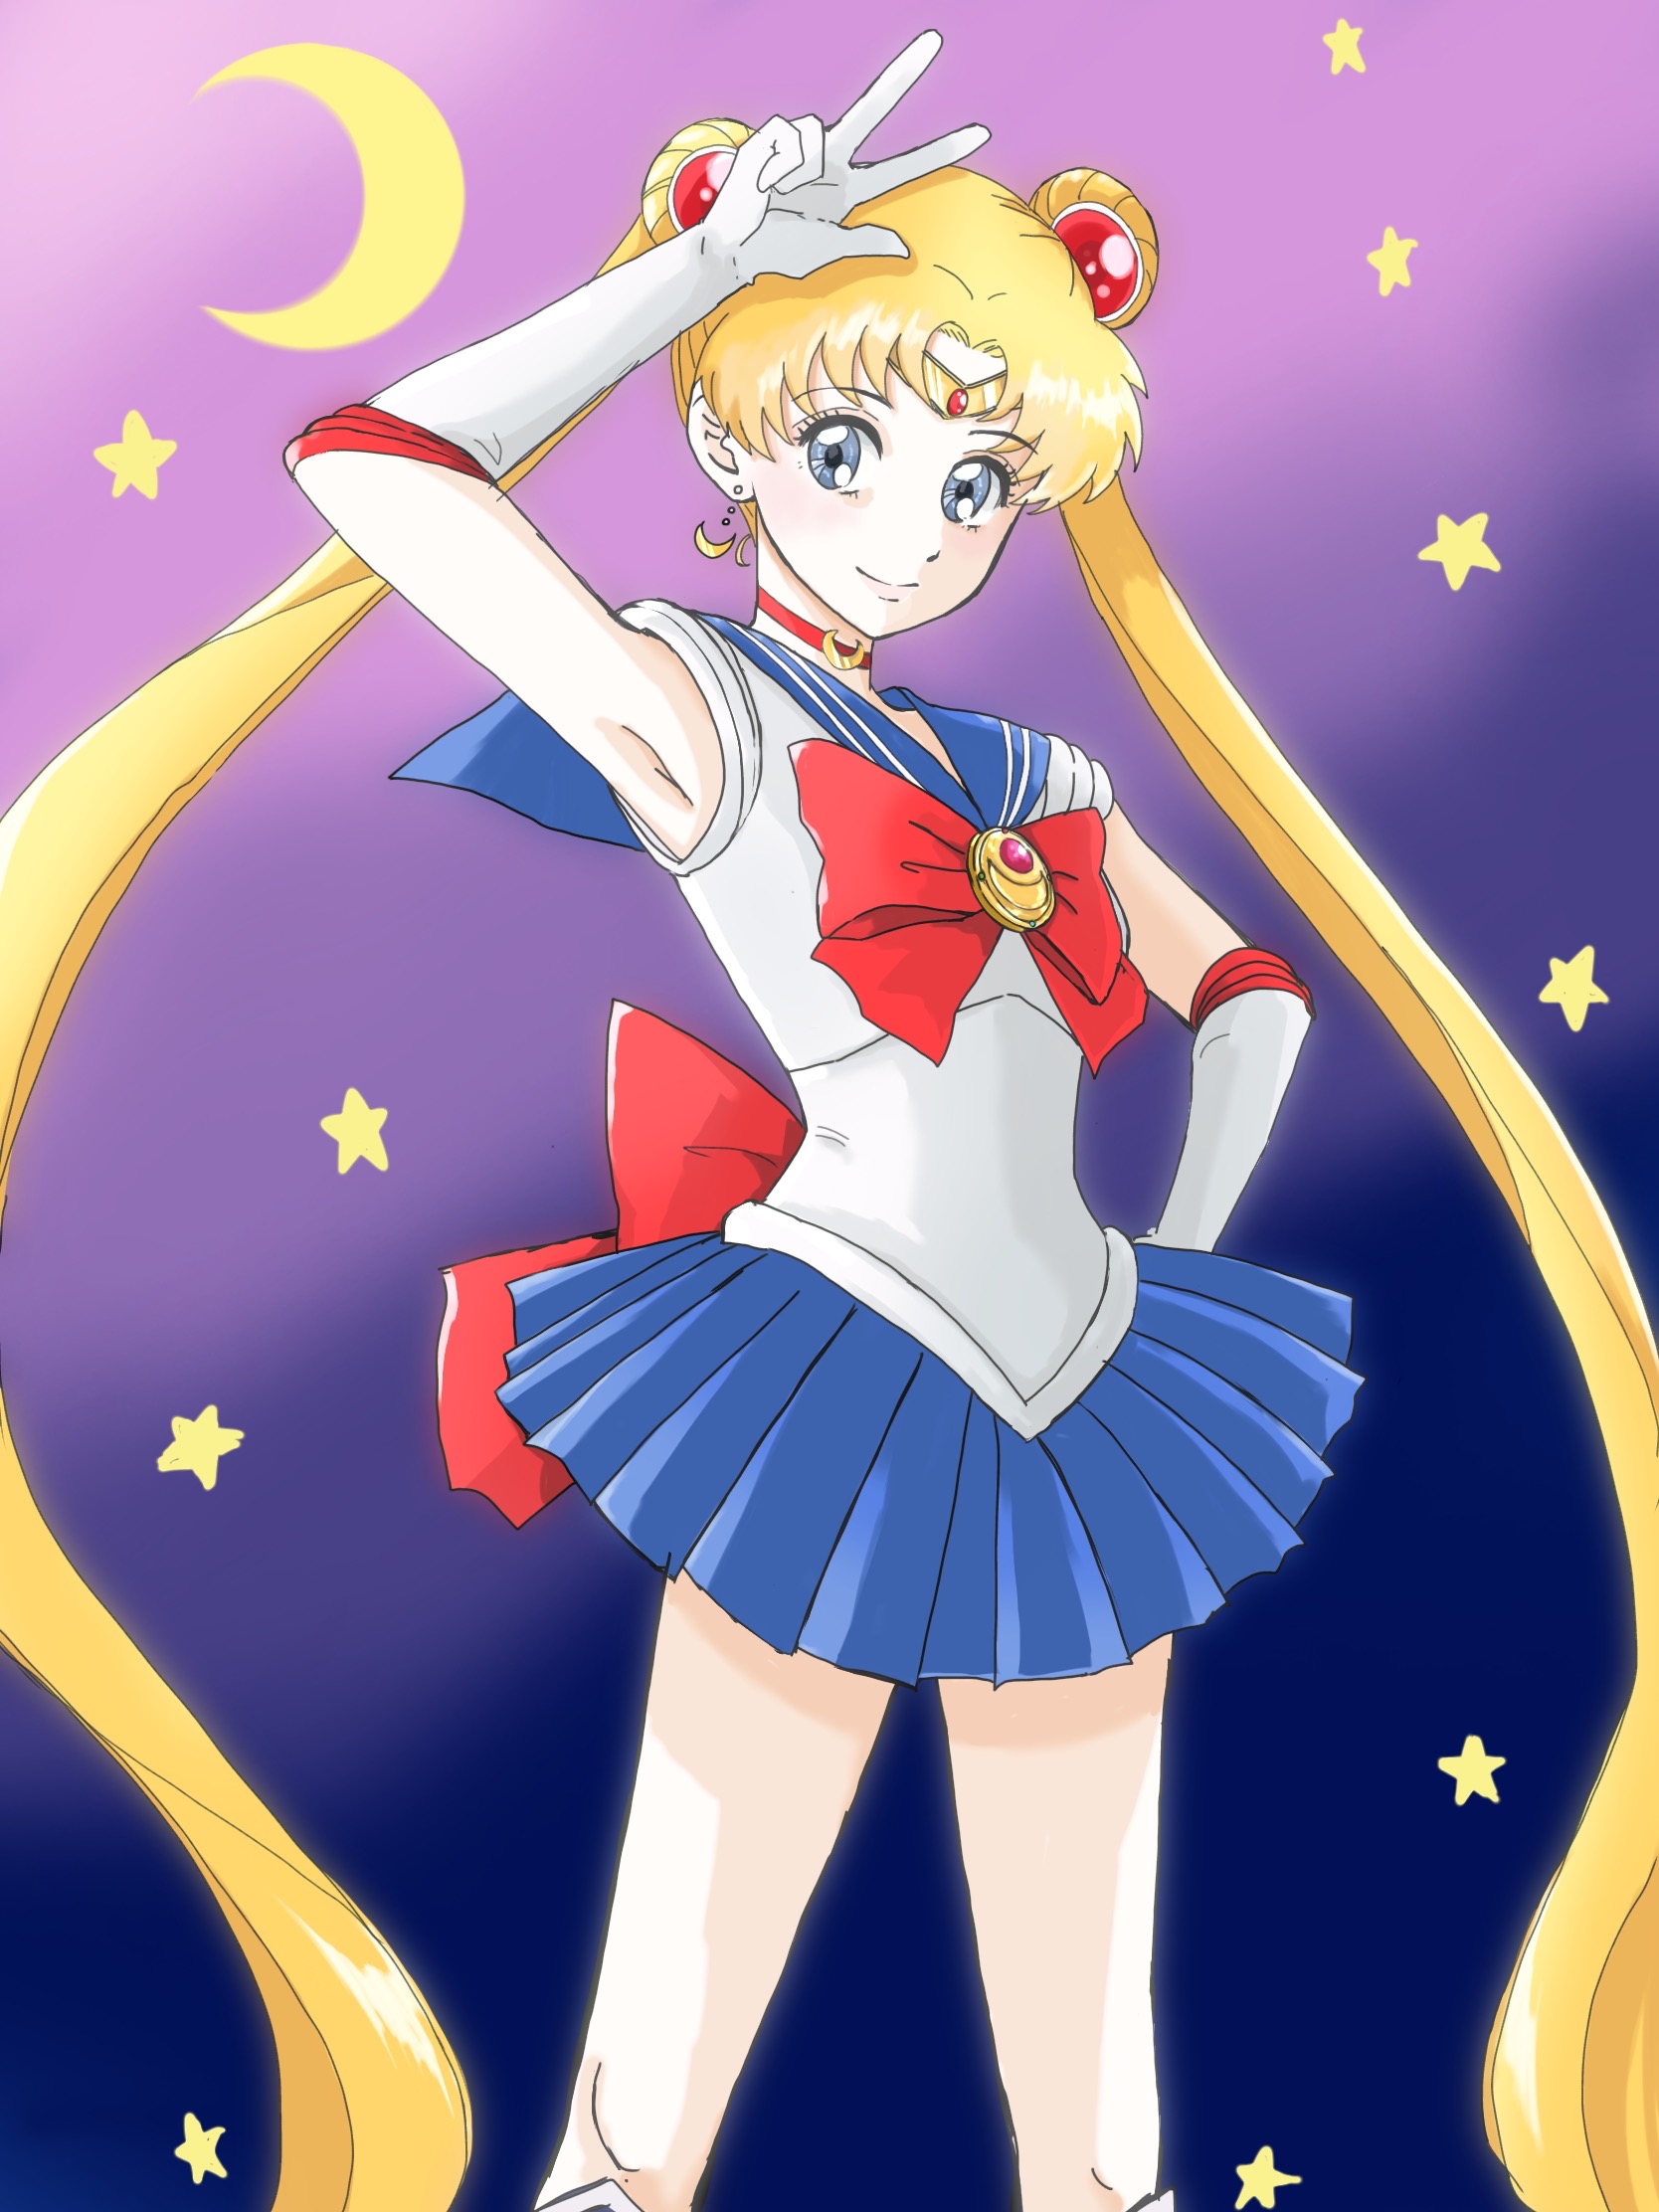 Wallpaper girl form Sailor Moon Usagi Tsukino images for desktop  section арт  download